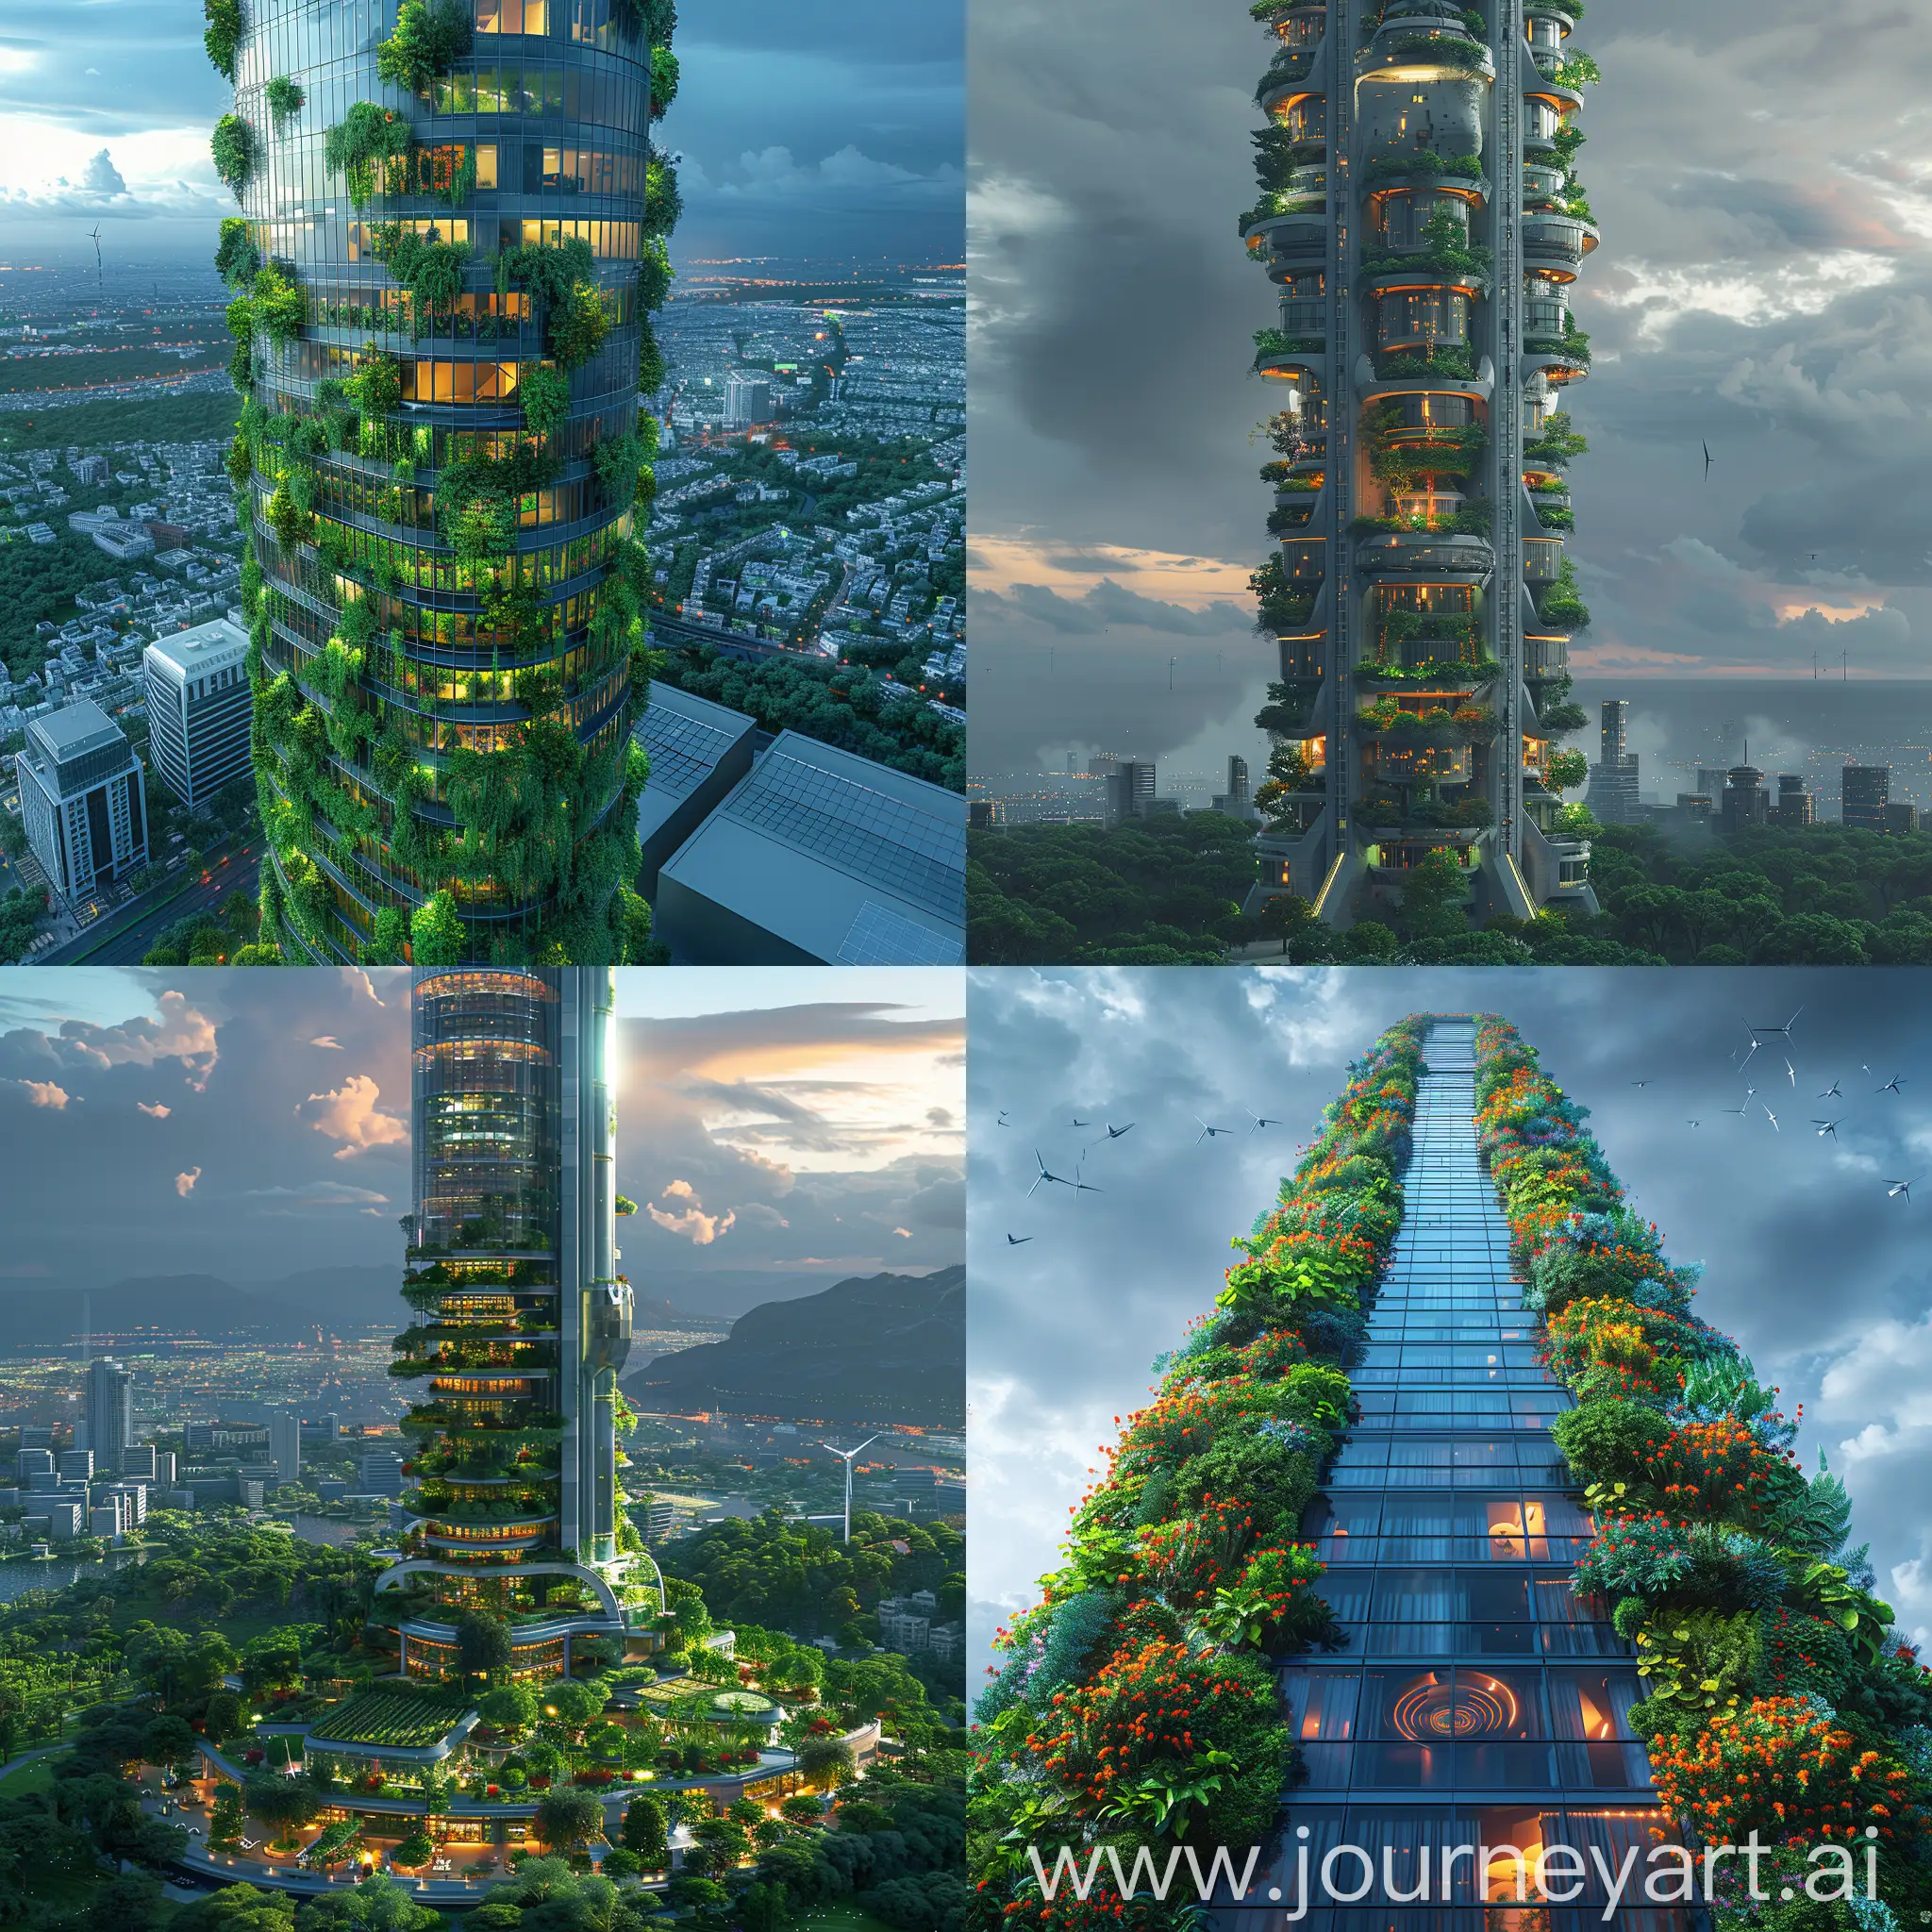 Futuristic-EcoFriendly-Skyscraper-with-Green-Roofs-and-Advanced-Technologies